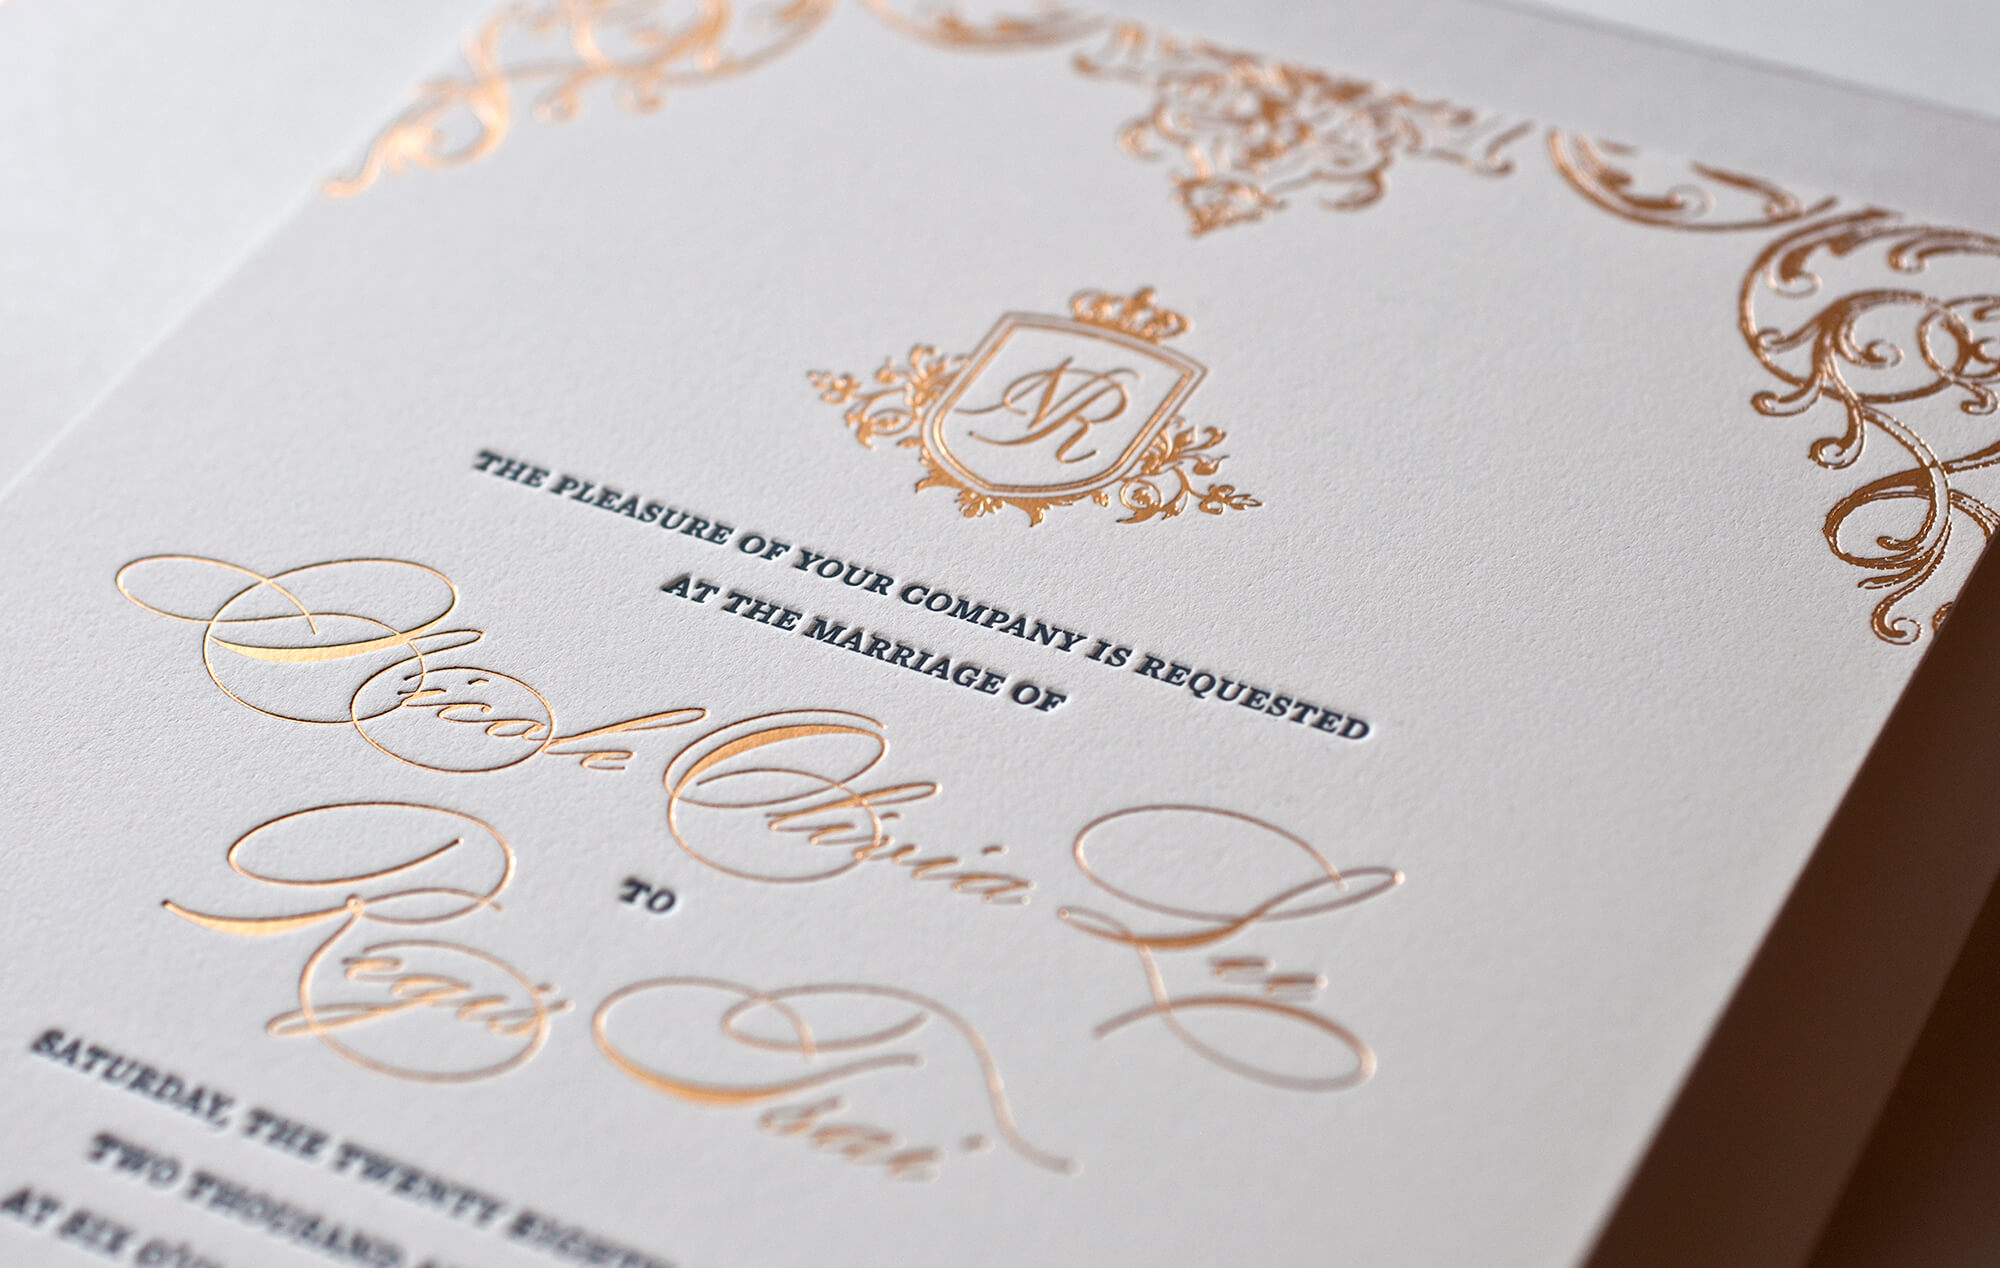 Ornate gold wedding invitation card